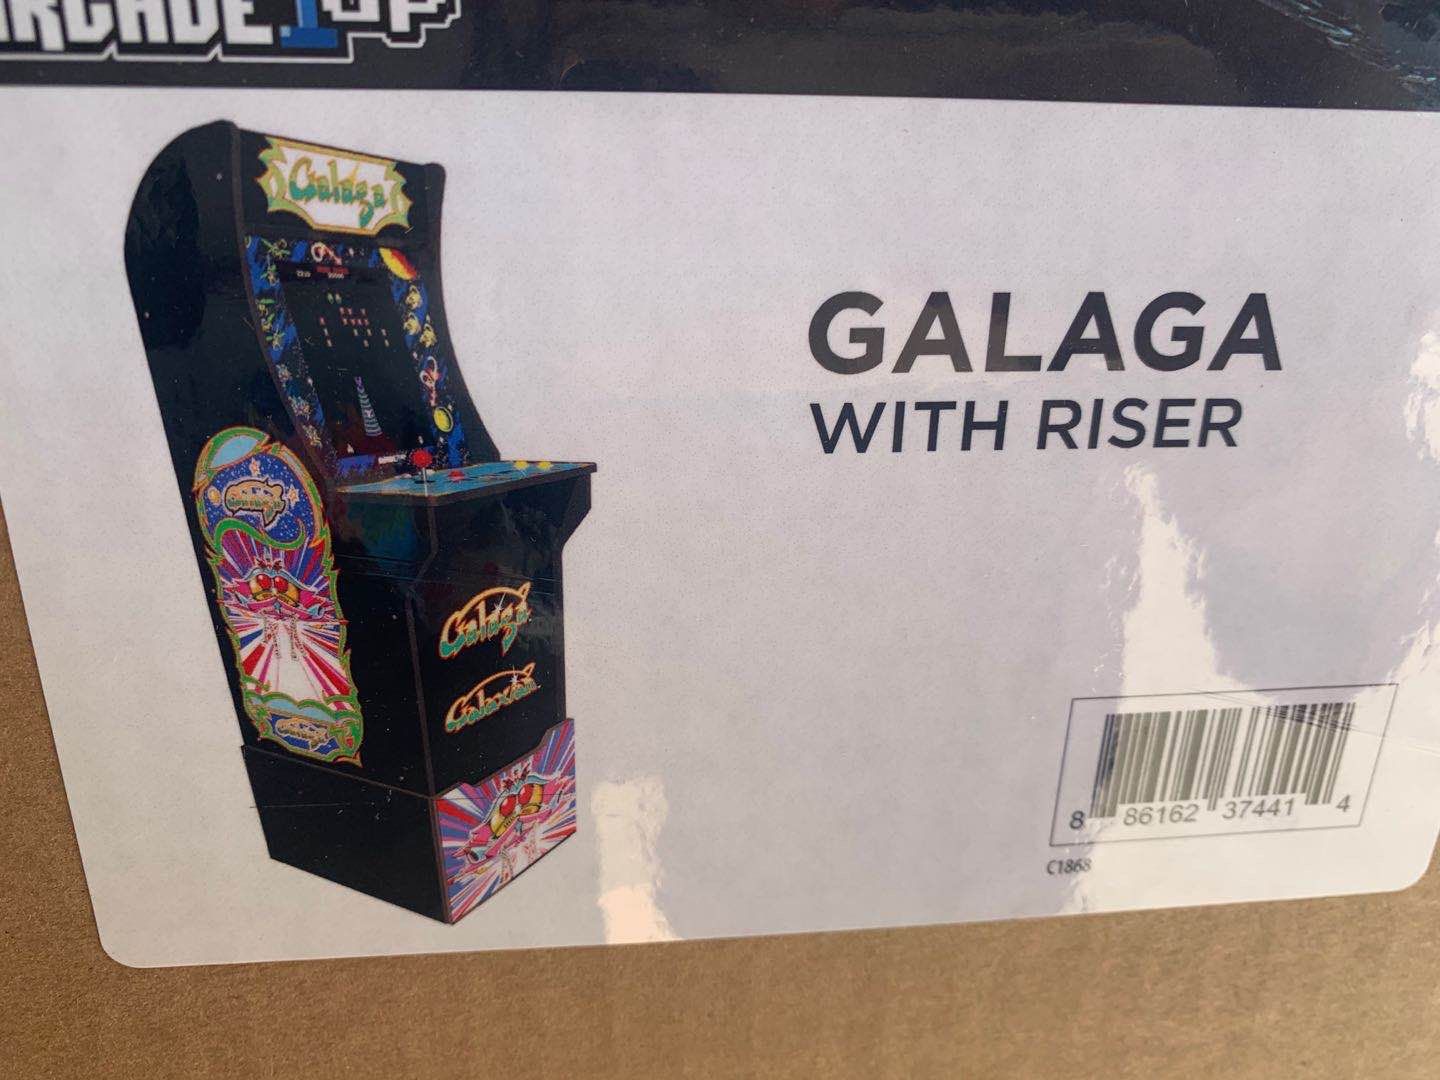 Brandnew Arcade1Up Galaga Arcade Cabinet with Custom Riser